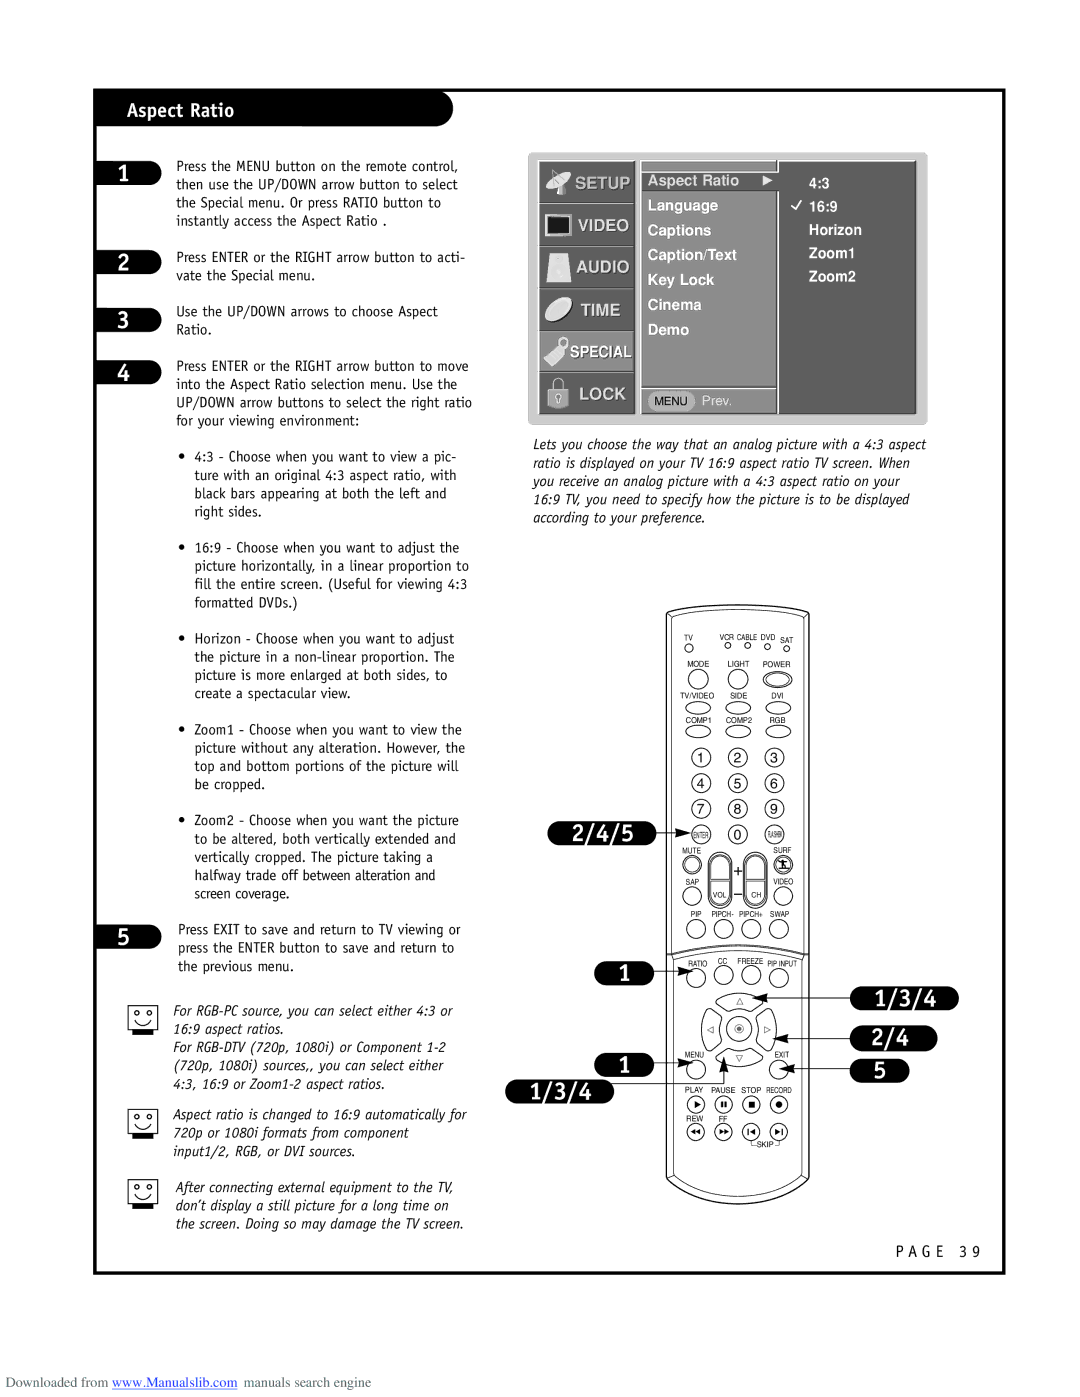 LG Electronics ru-44sz80l Aspect Ratio, Language Captions Caption/Text Key Lock Cinema Demo, Horizon Zoom1 Zoom2 